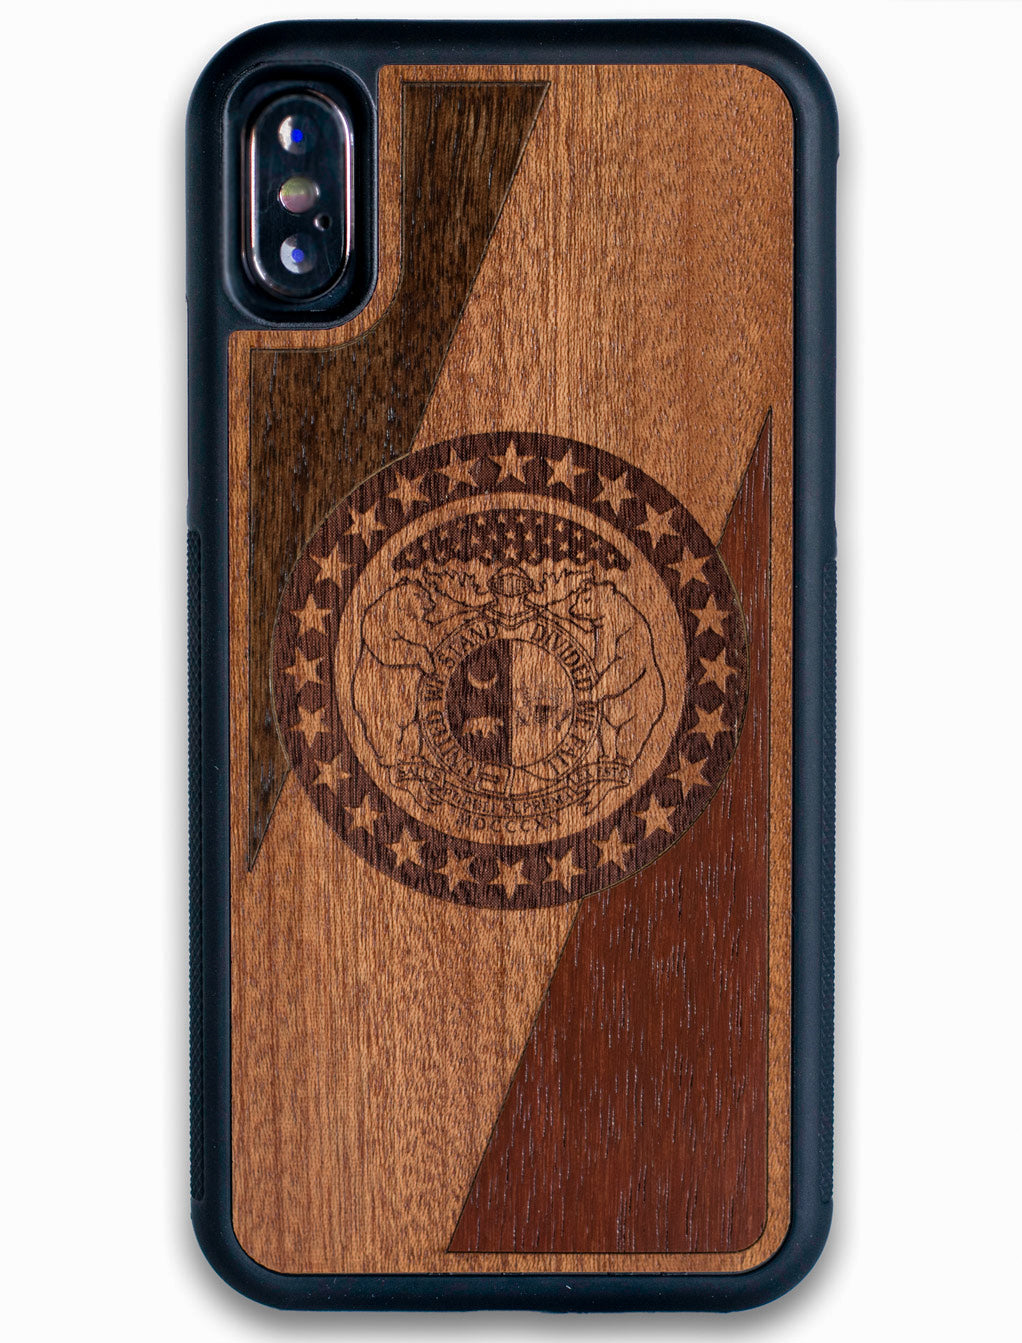 Missouri flag wooden iPhone X case